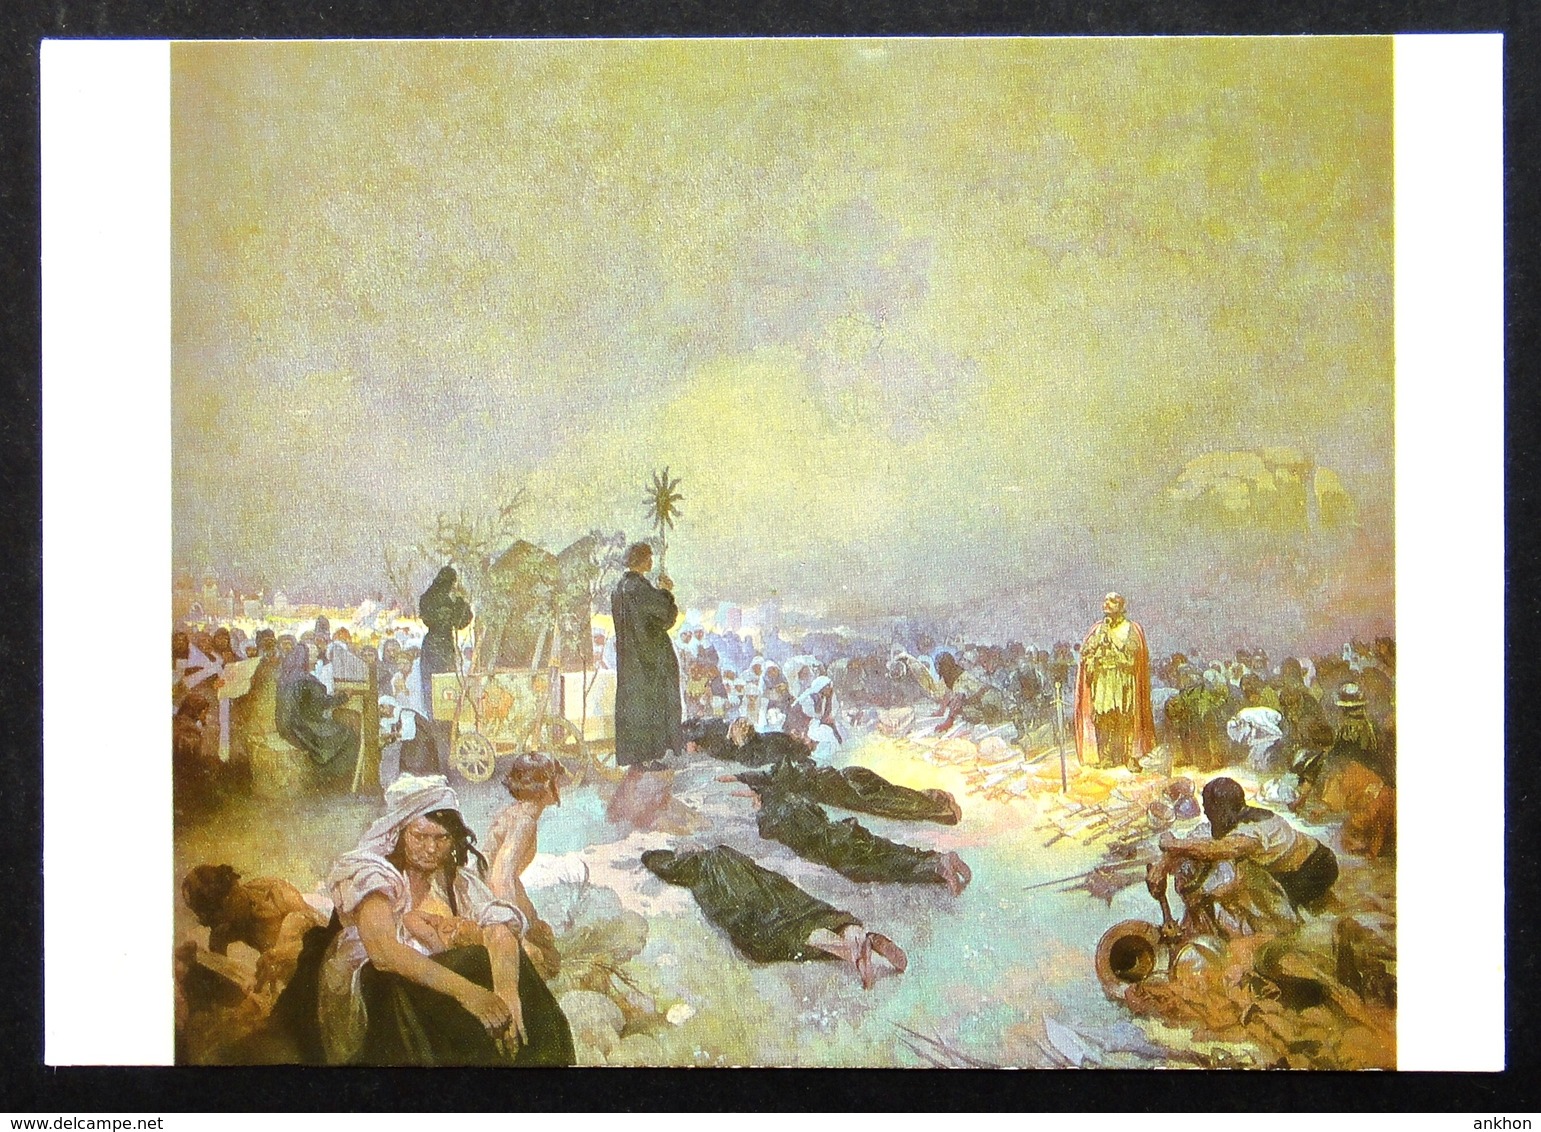 740075 Alphonse MUCHA ~ The Slav Epic (After Battle) ~ DEATH Motherhood BREASTFEEDING ~ Czech Art Painting Postcard - Mucha, Alphonse